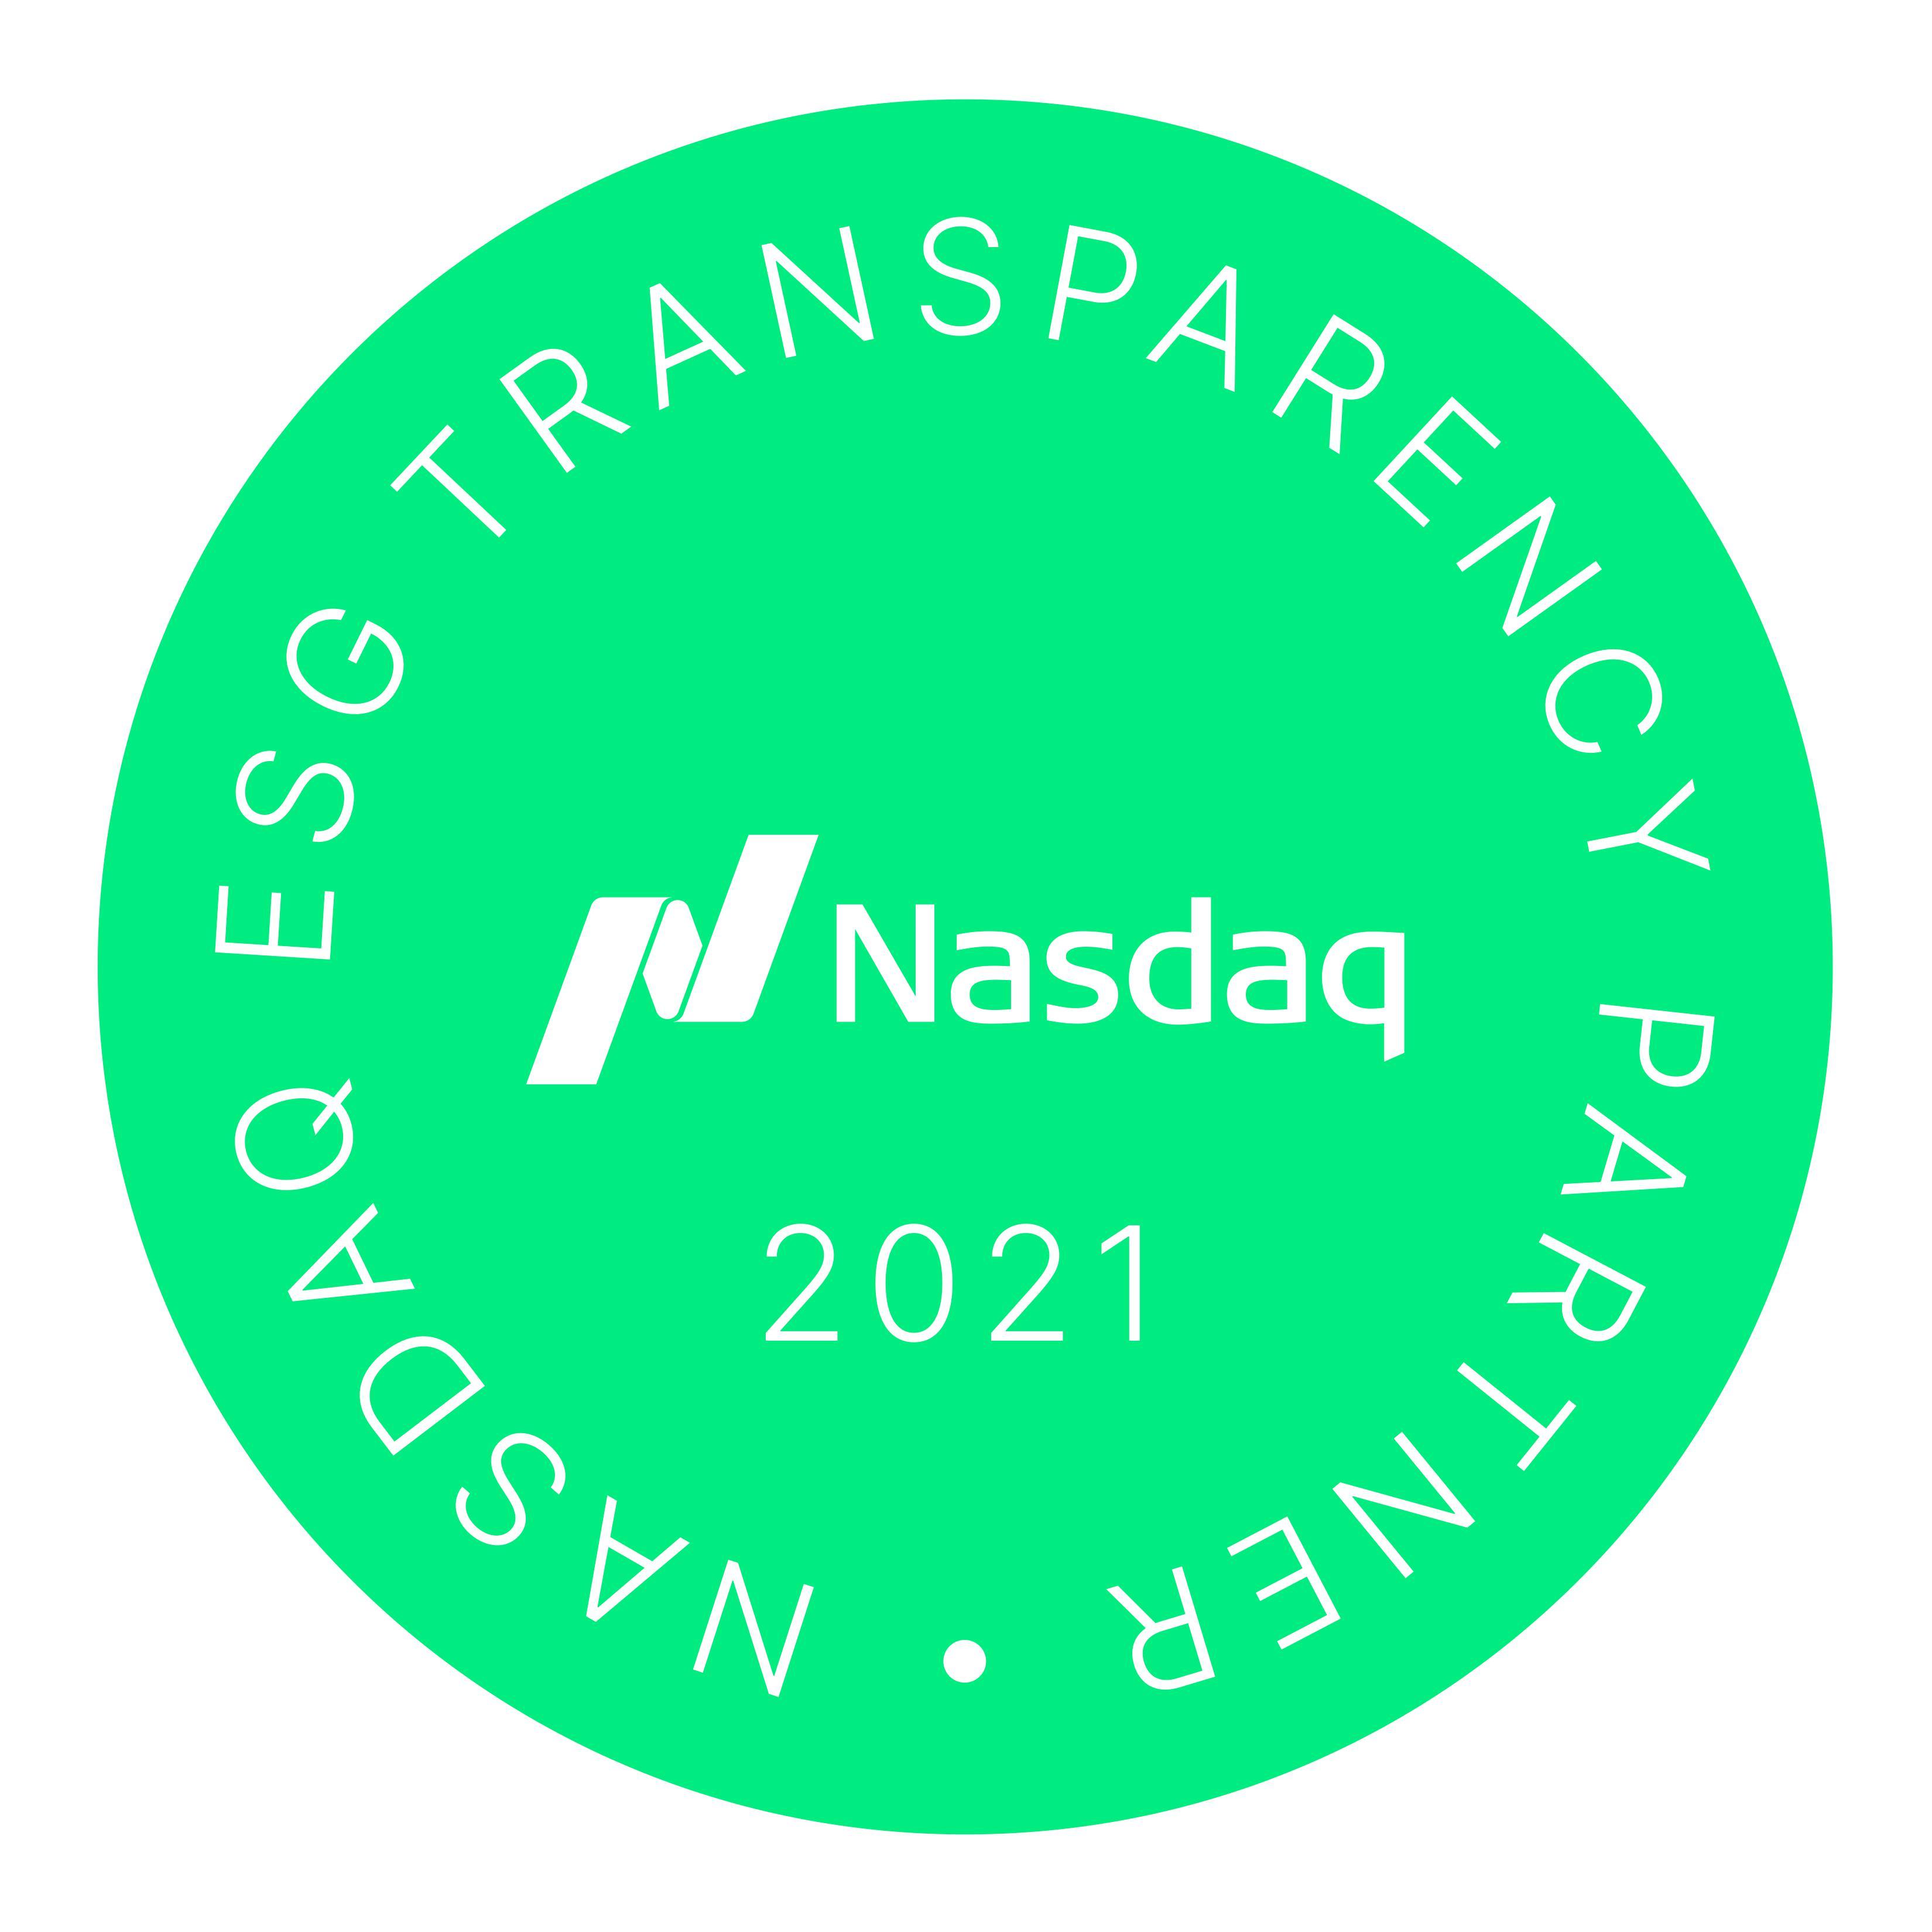 Nasdaq sustainable badge